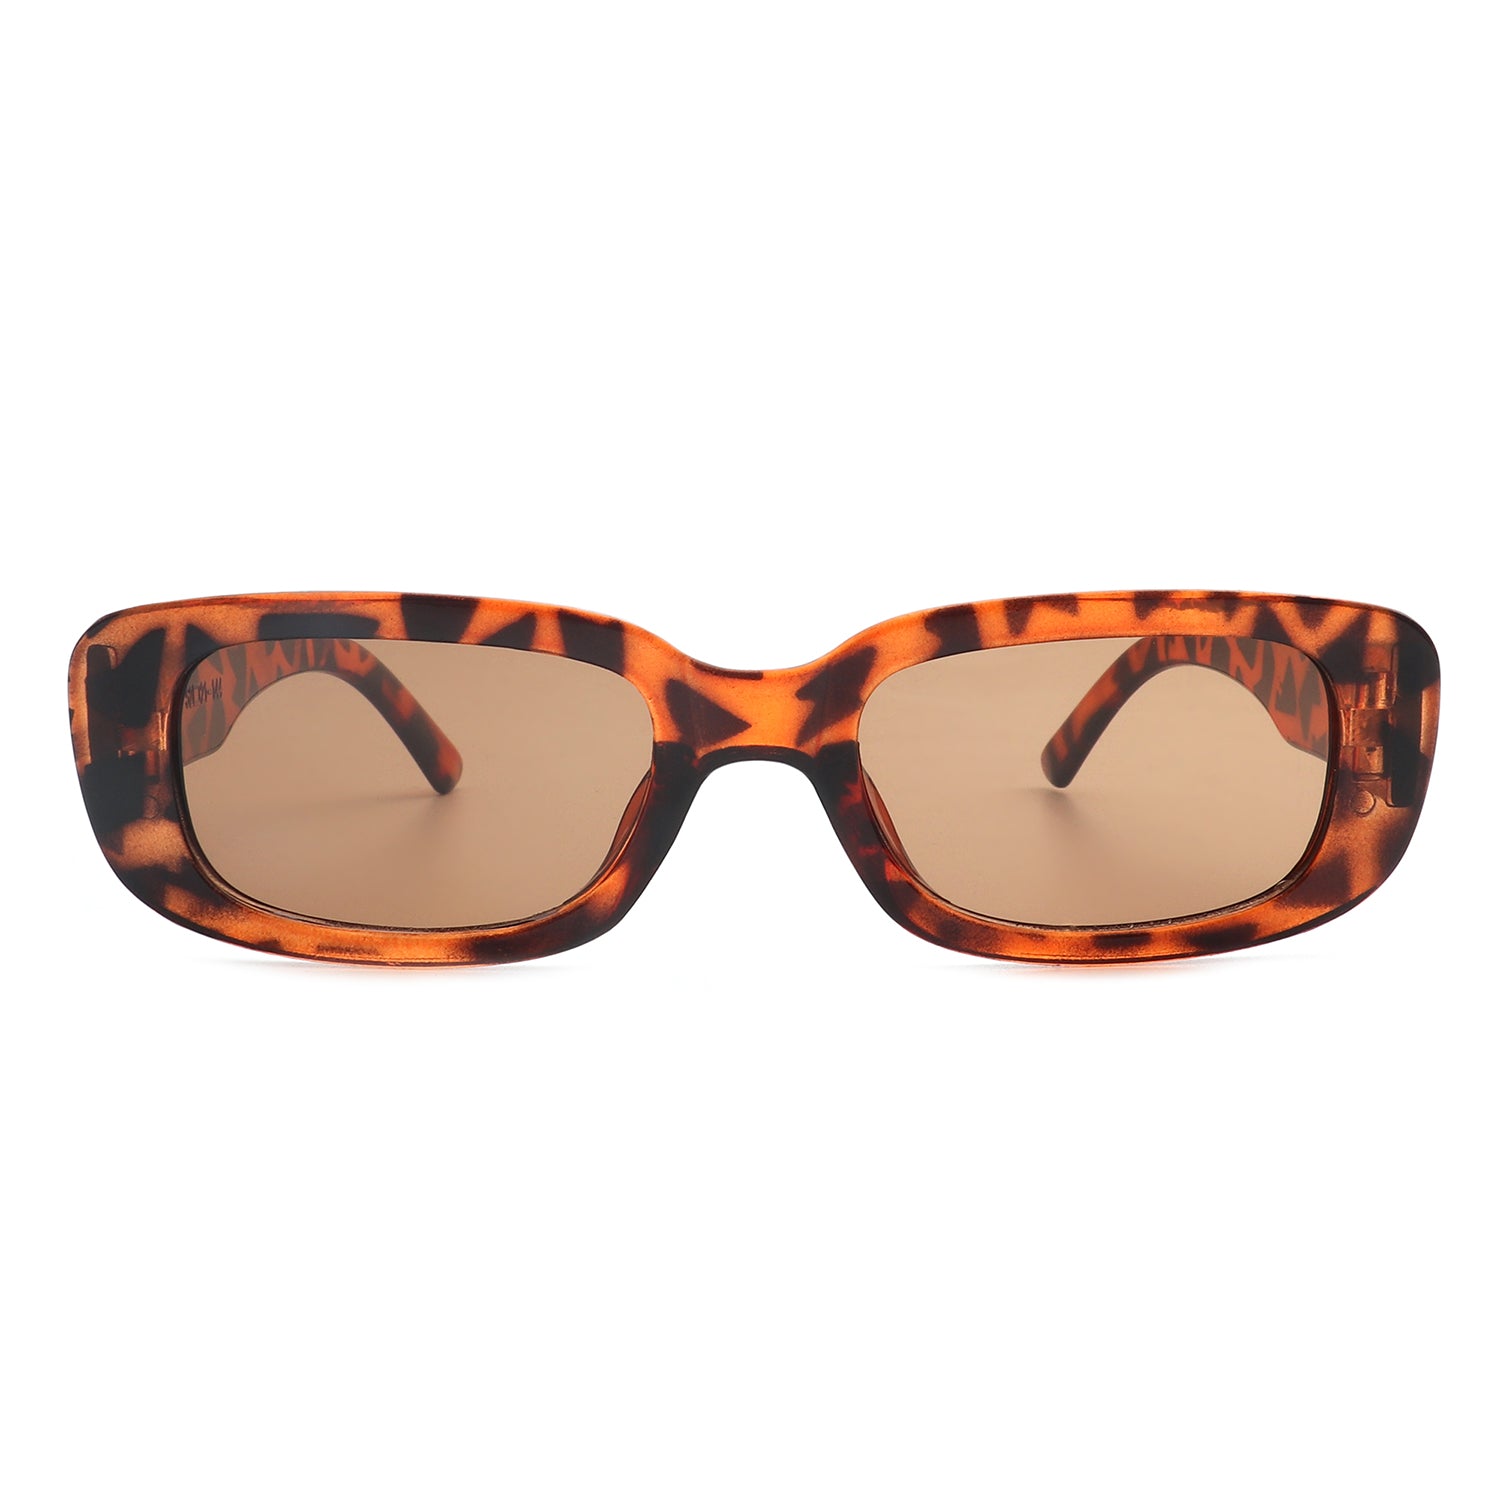 HS18059 - Retro Rectangle Narrow Slim Fashion Sunglasses